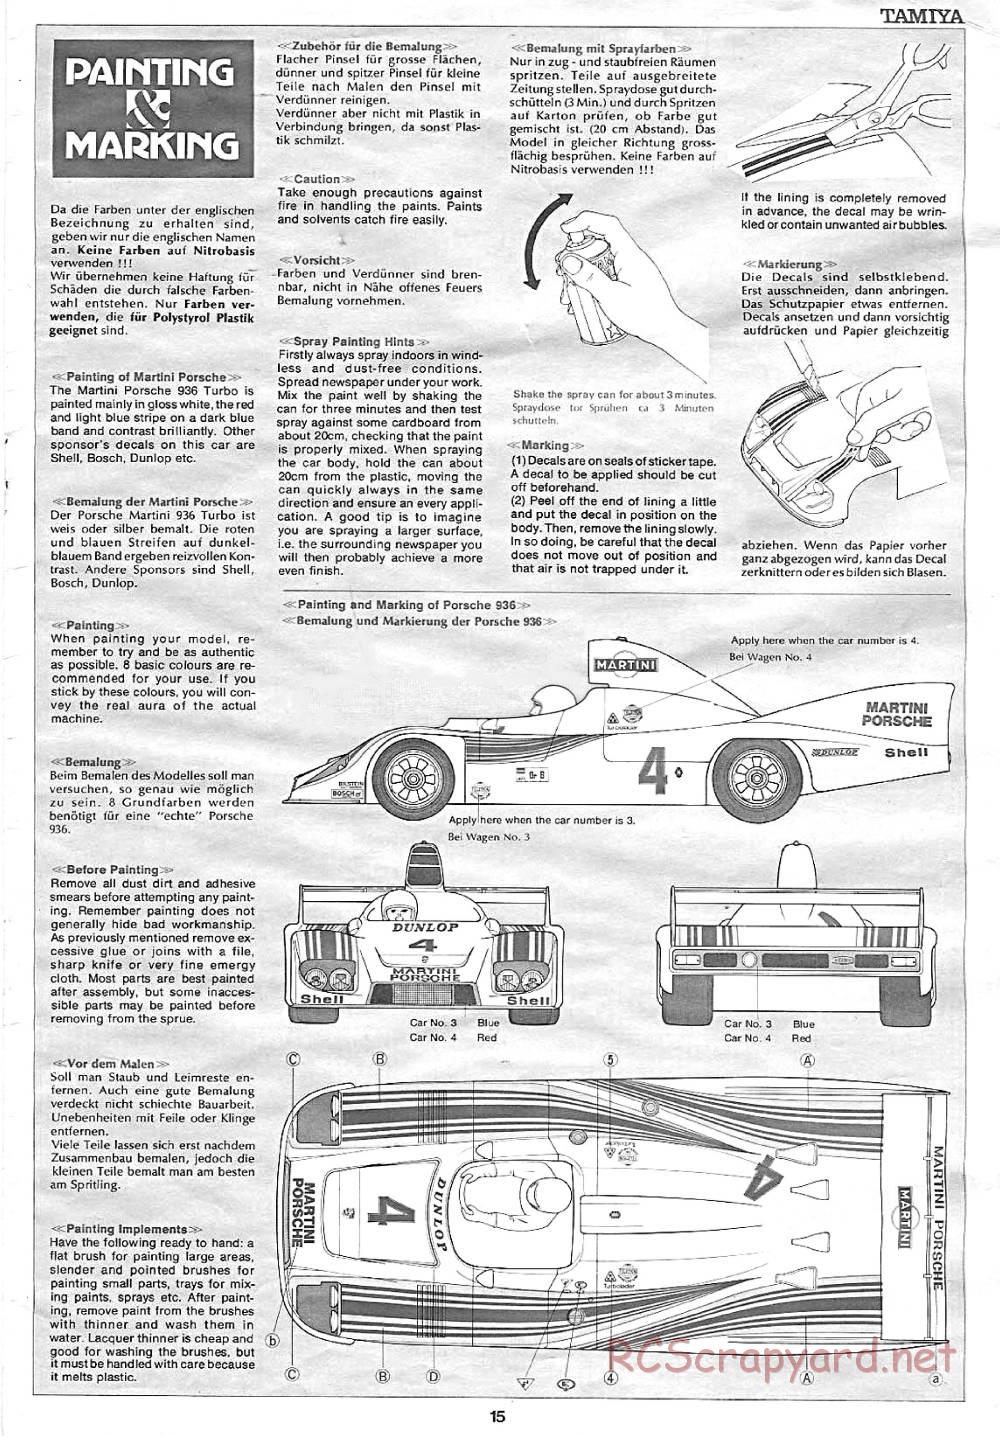 Tamiya - Martini Porsche 936 Turbo - 58006 - Manual - Page 15